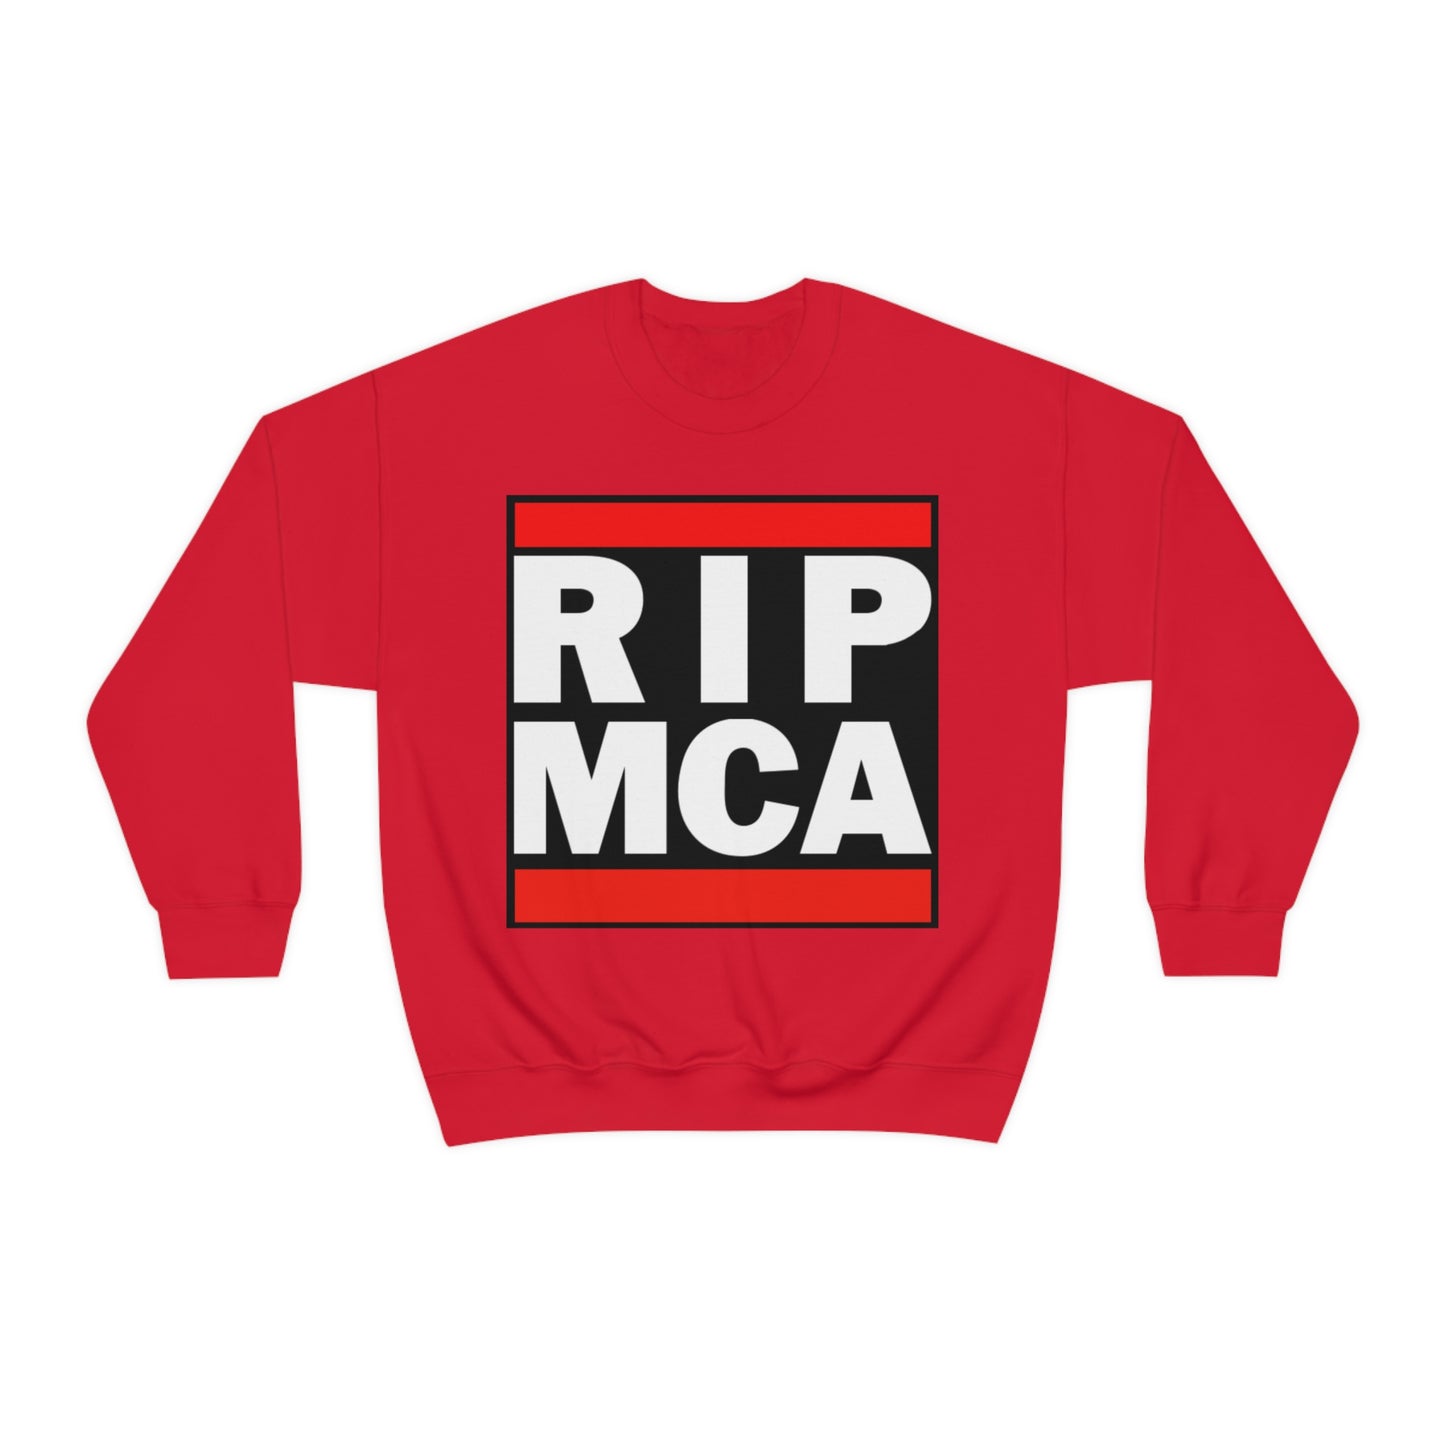 RIP MCA - the crew neck